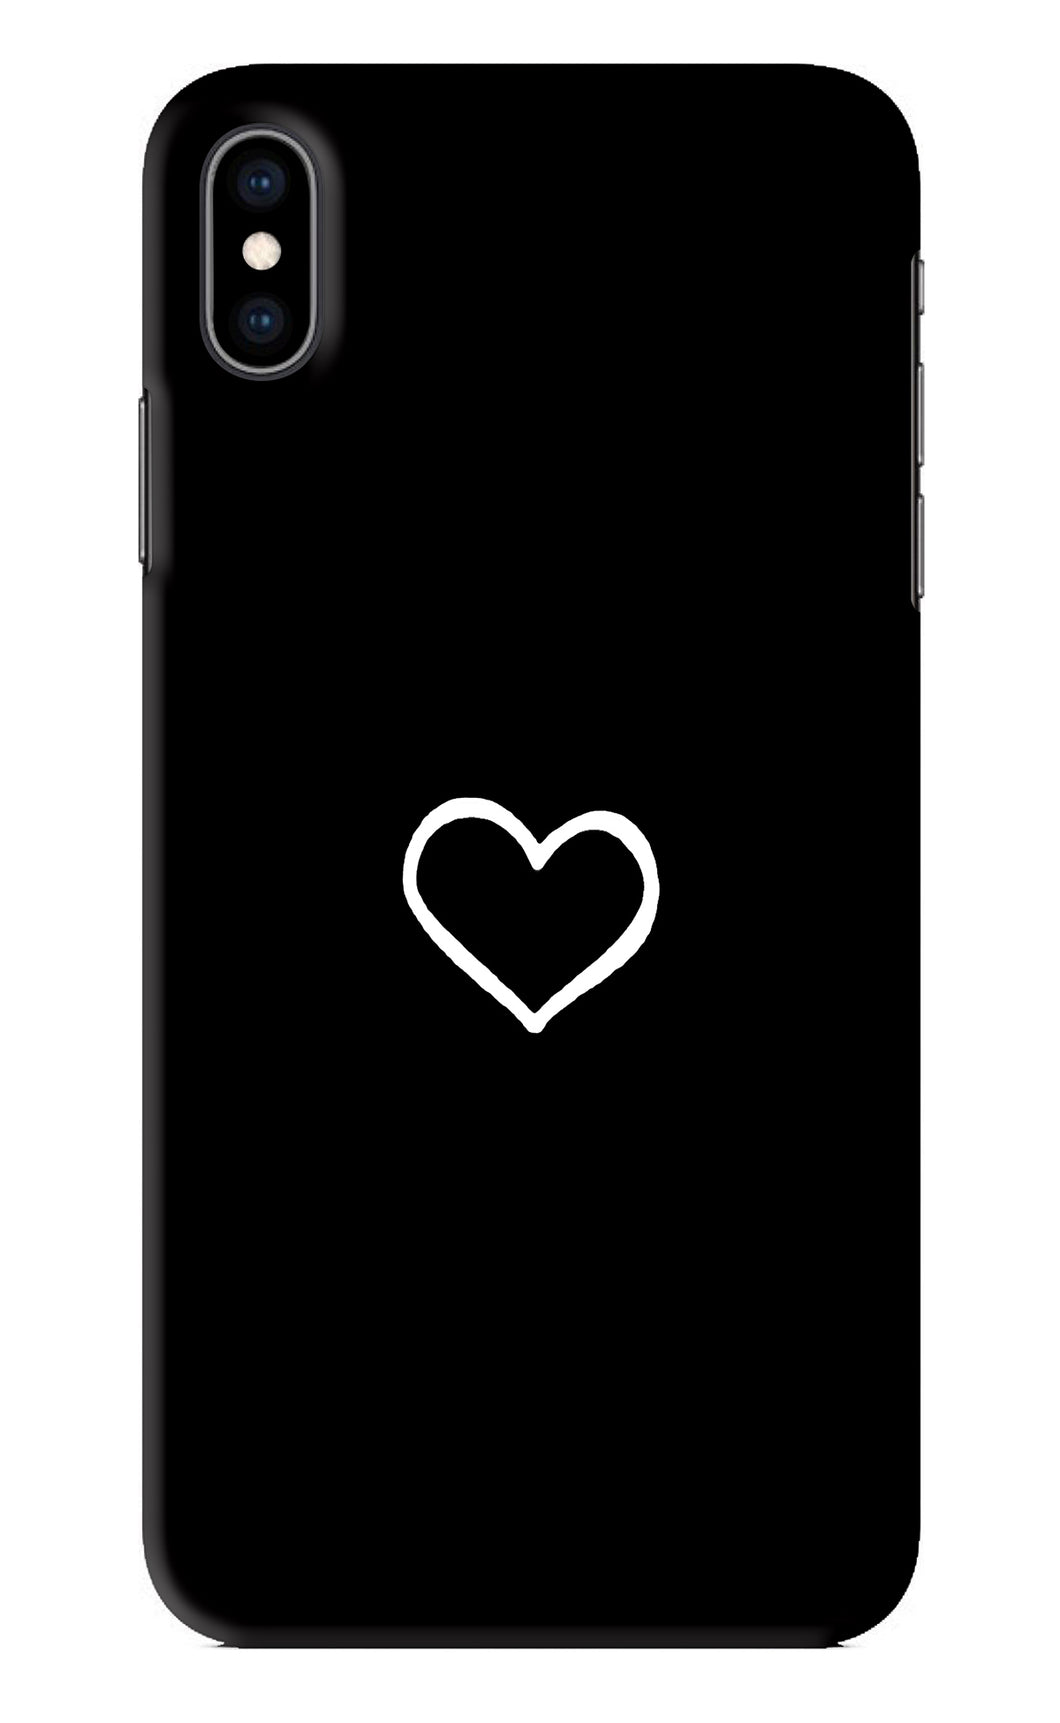 Heart iPhone XS Max Back Skin Wrap